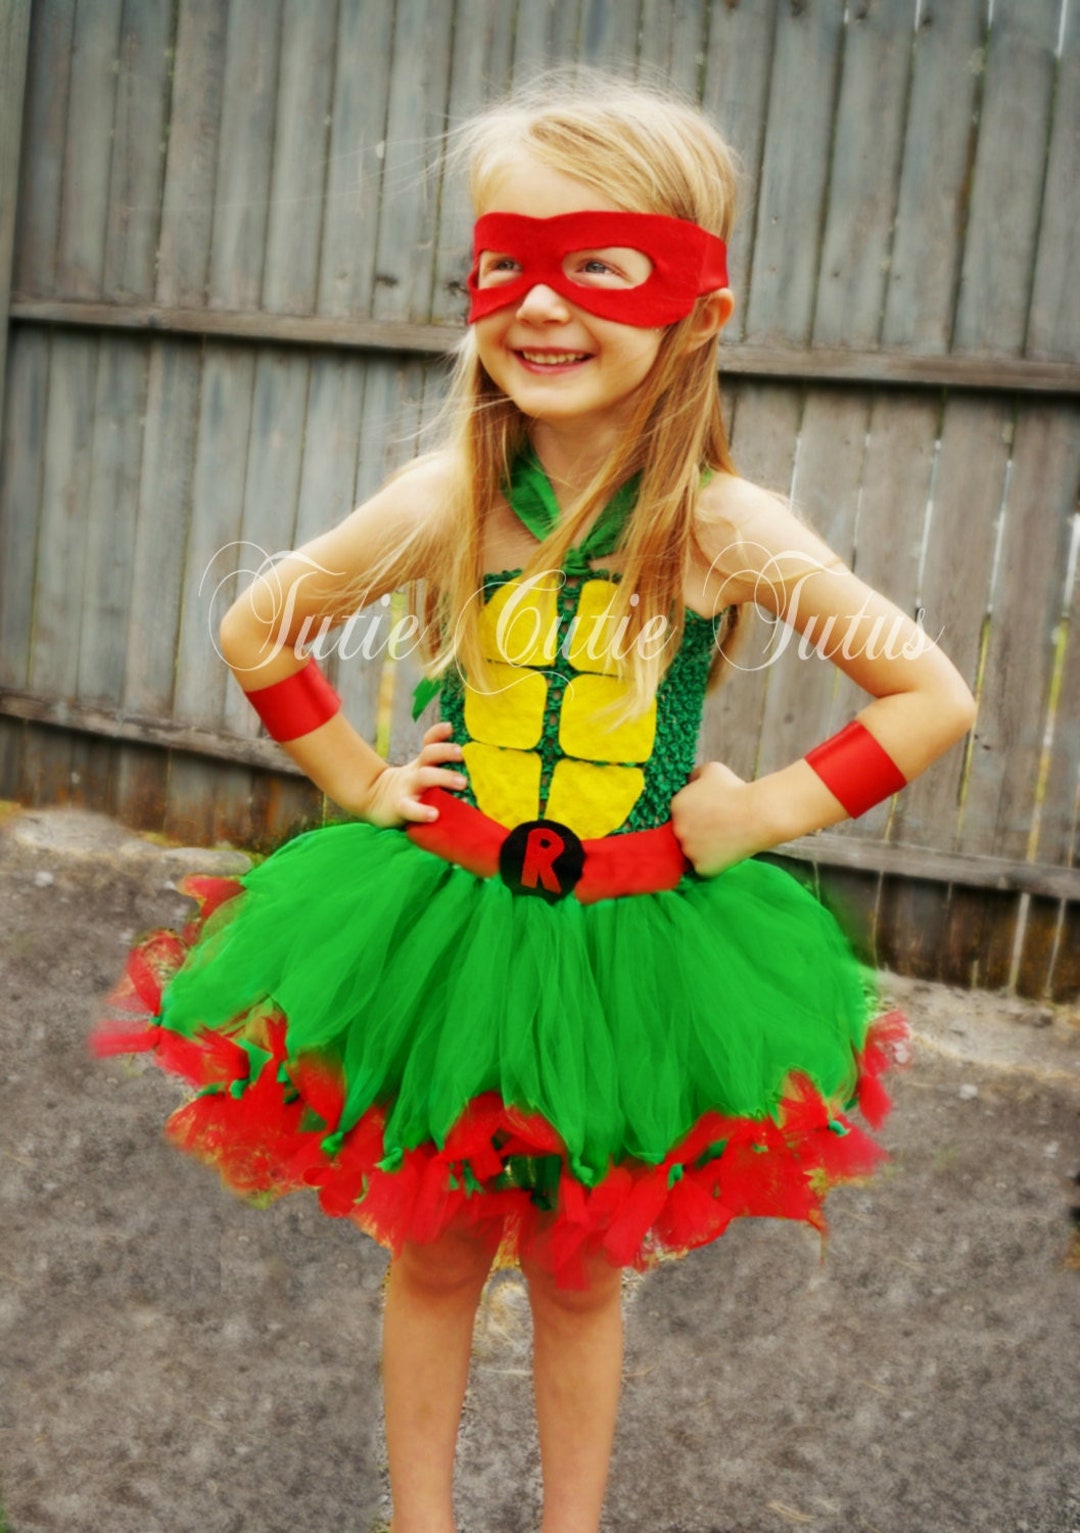 Nickelodeon Toddler Boys' Teenage Mutant Ninja Turtles Costume Pajama Set  (5T) 